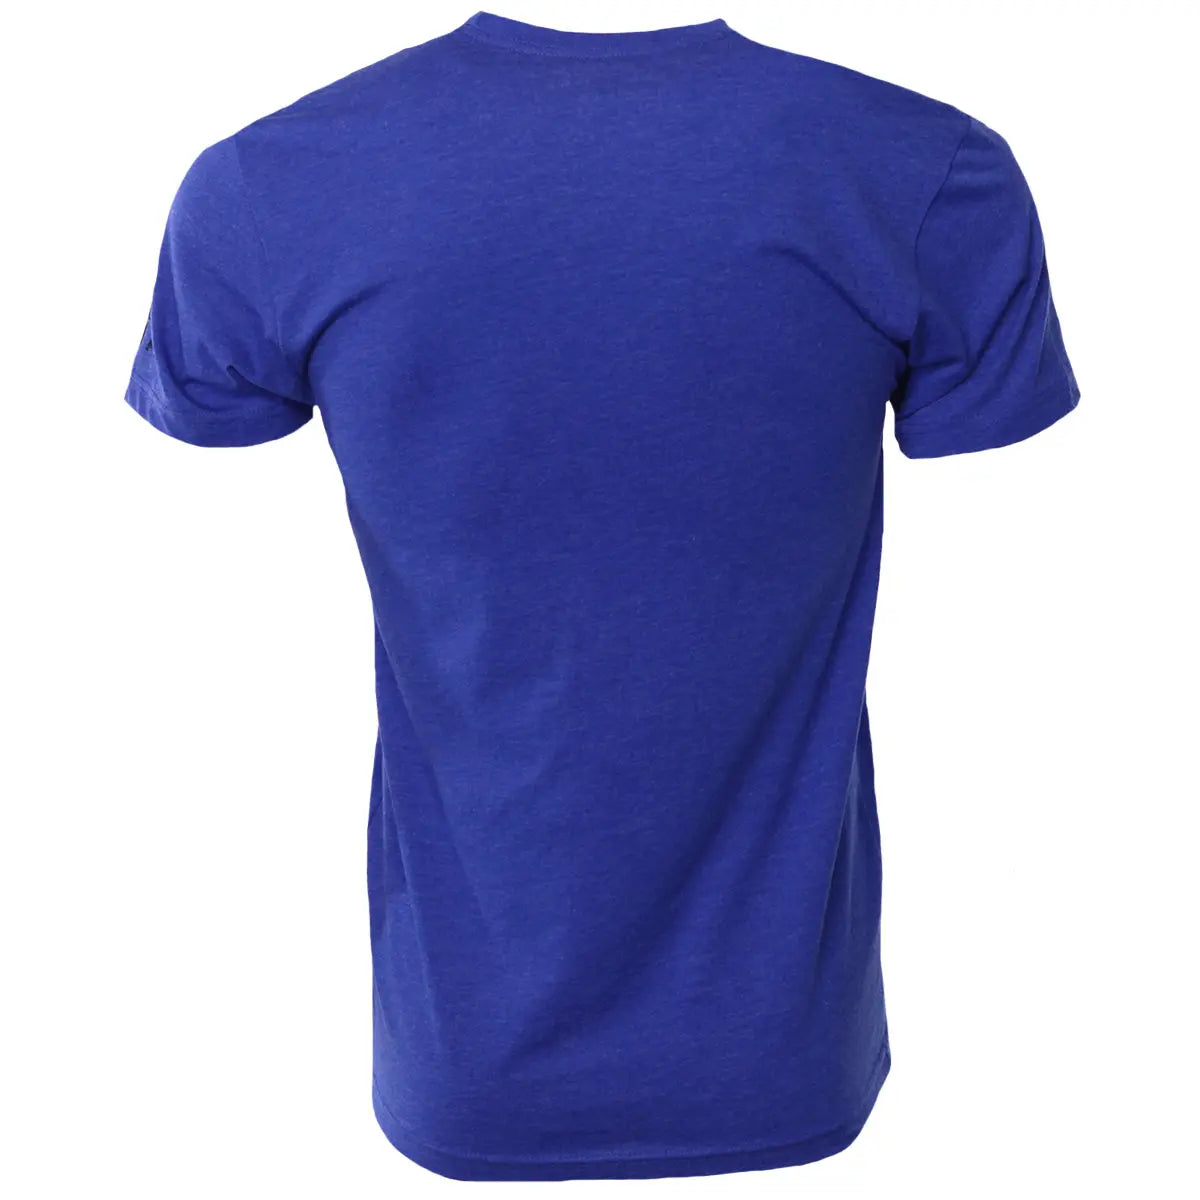 Forza Sports "Soar" MMA T-Shirt - Royal Blue Forza Sports